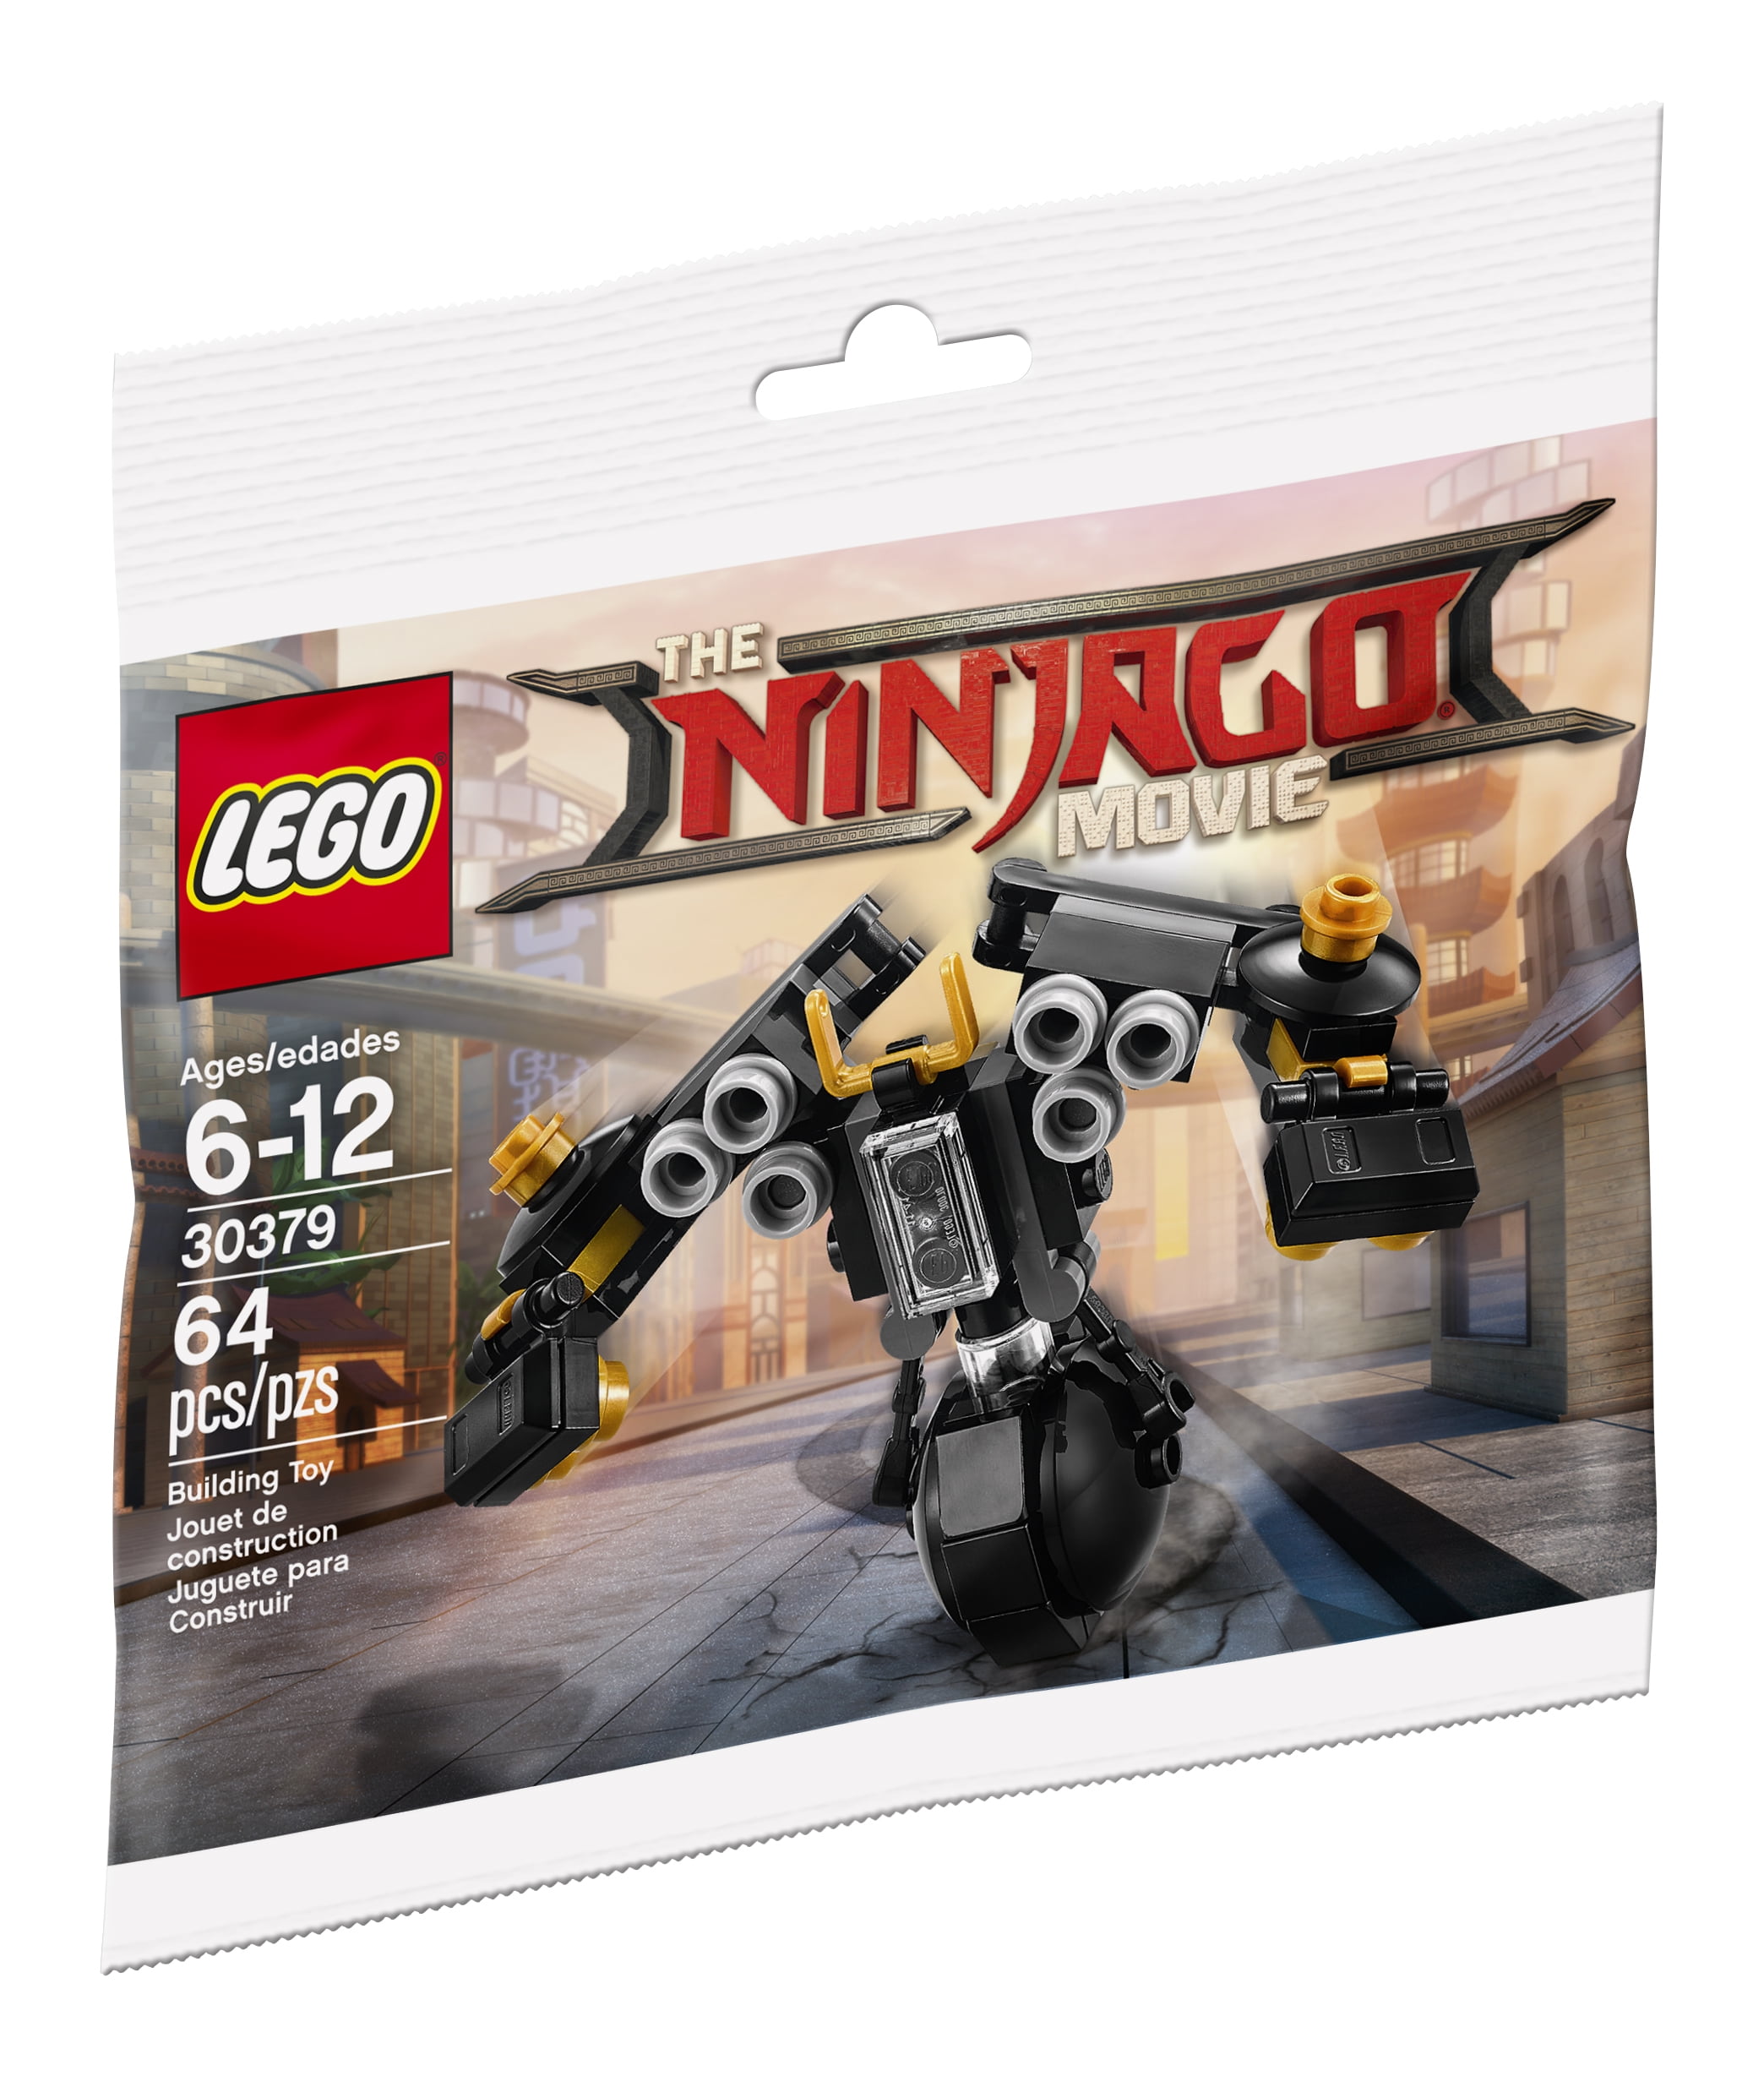 Lego Quake mech 30379 die Ninjago Movie 2017